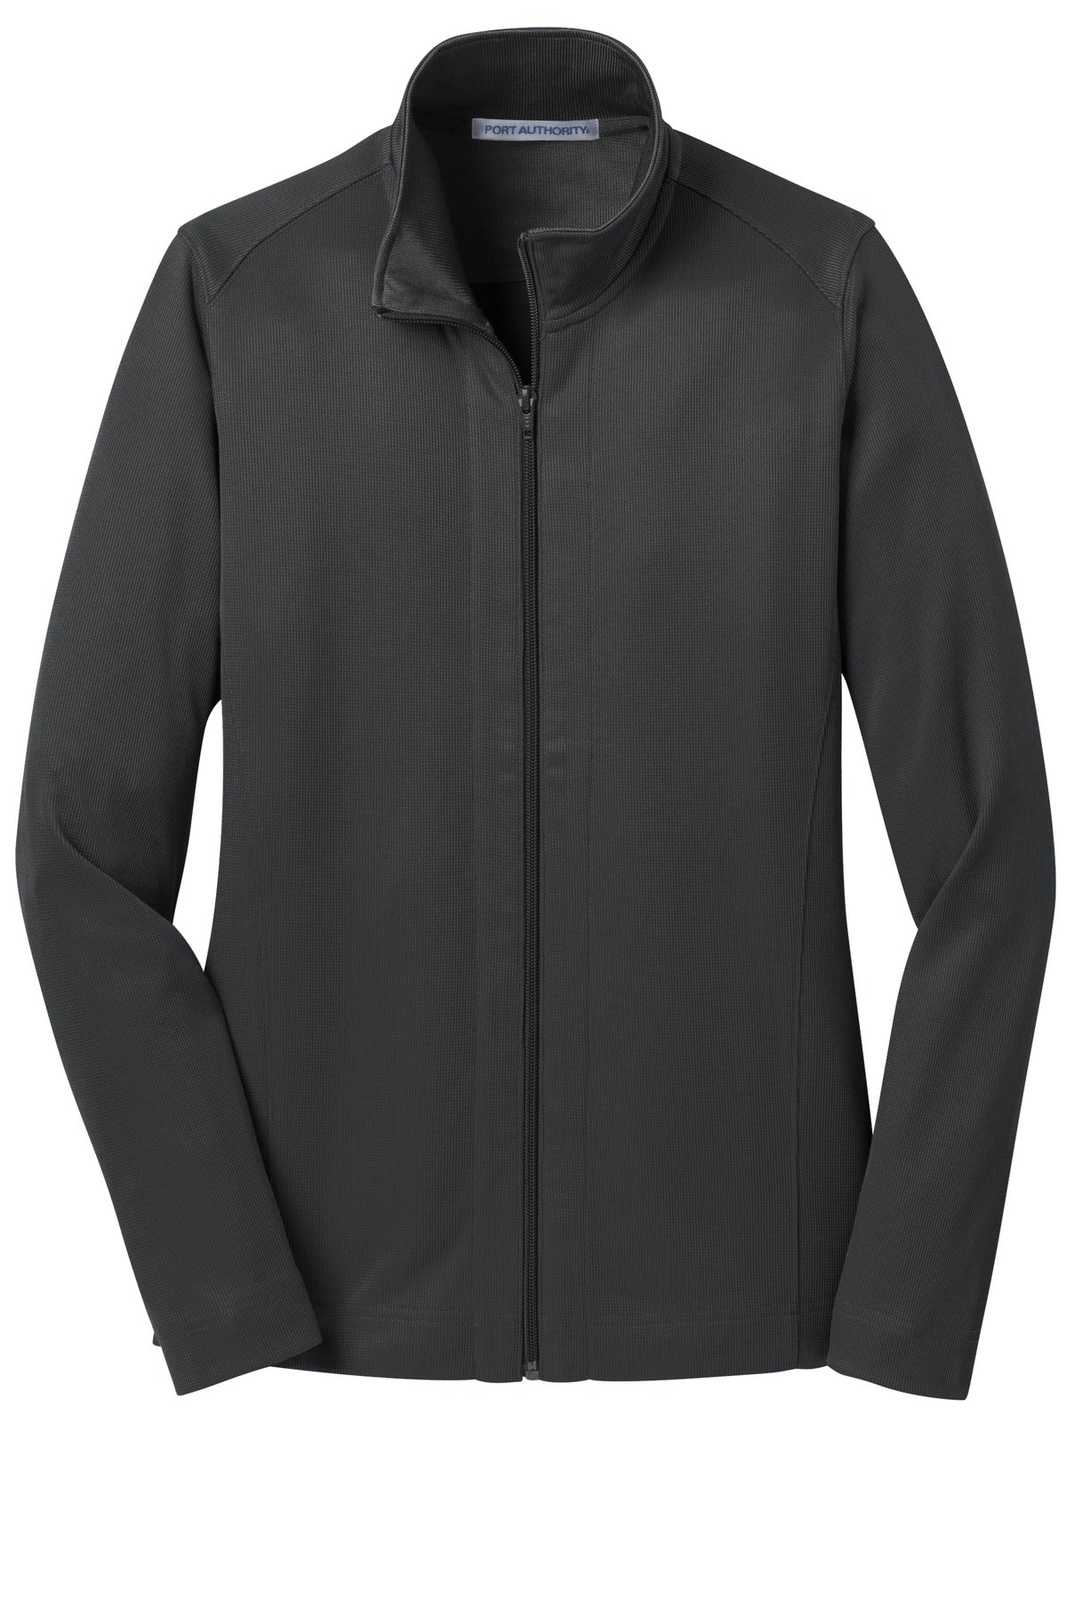 Port Authority L805 Ladies Vertical Texture Full-Zip Jacket - Iron Gray Black - HIT a Double - 5